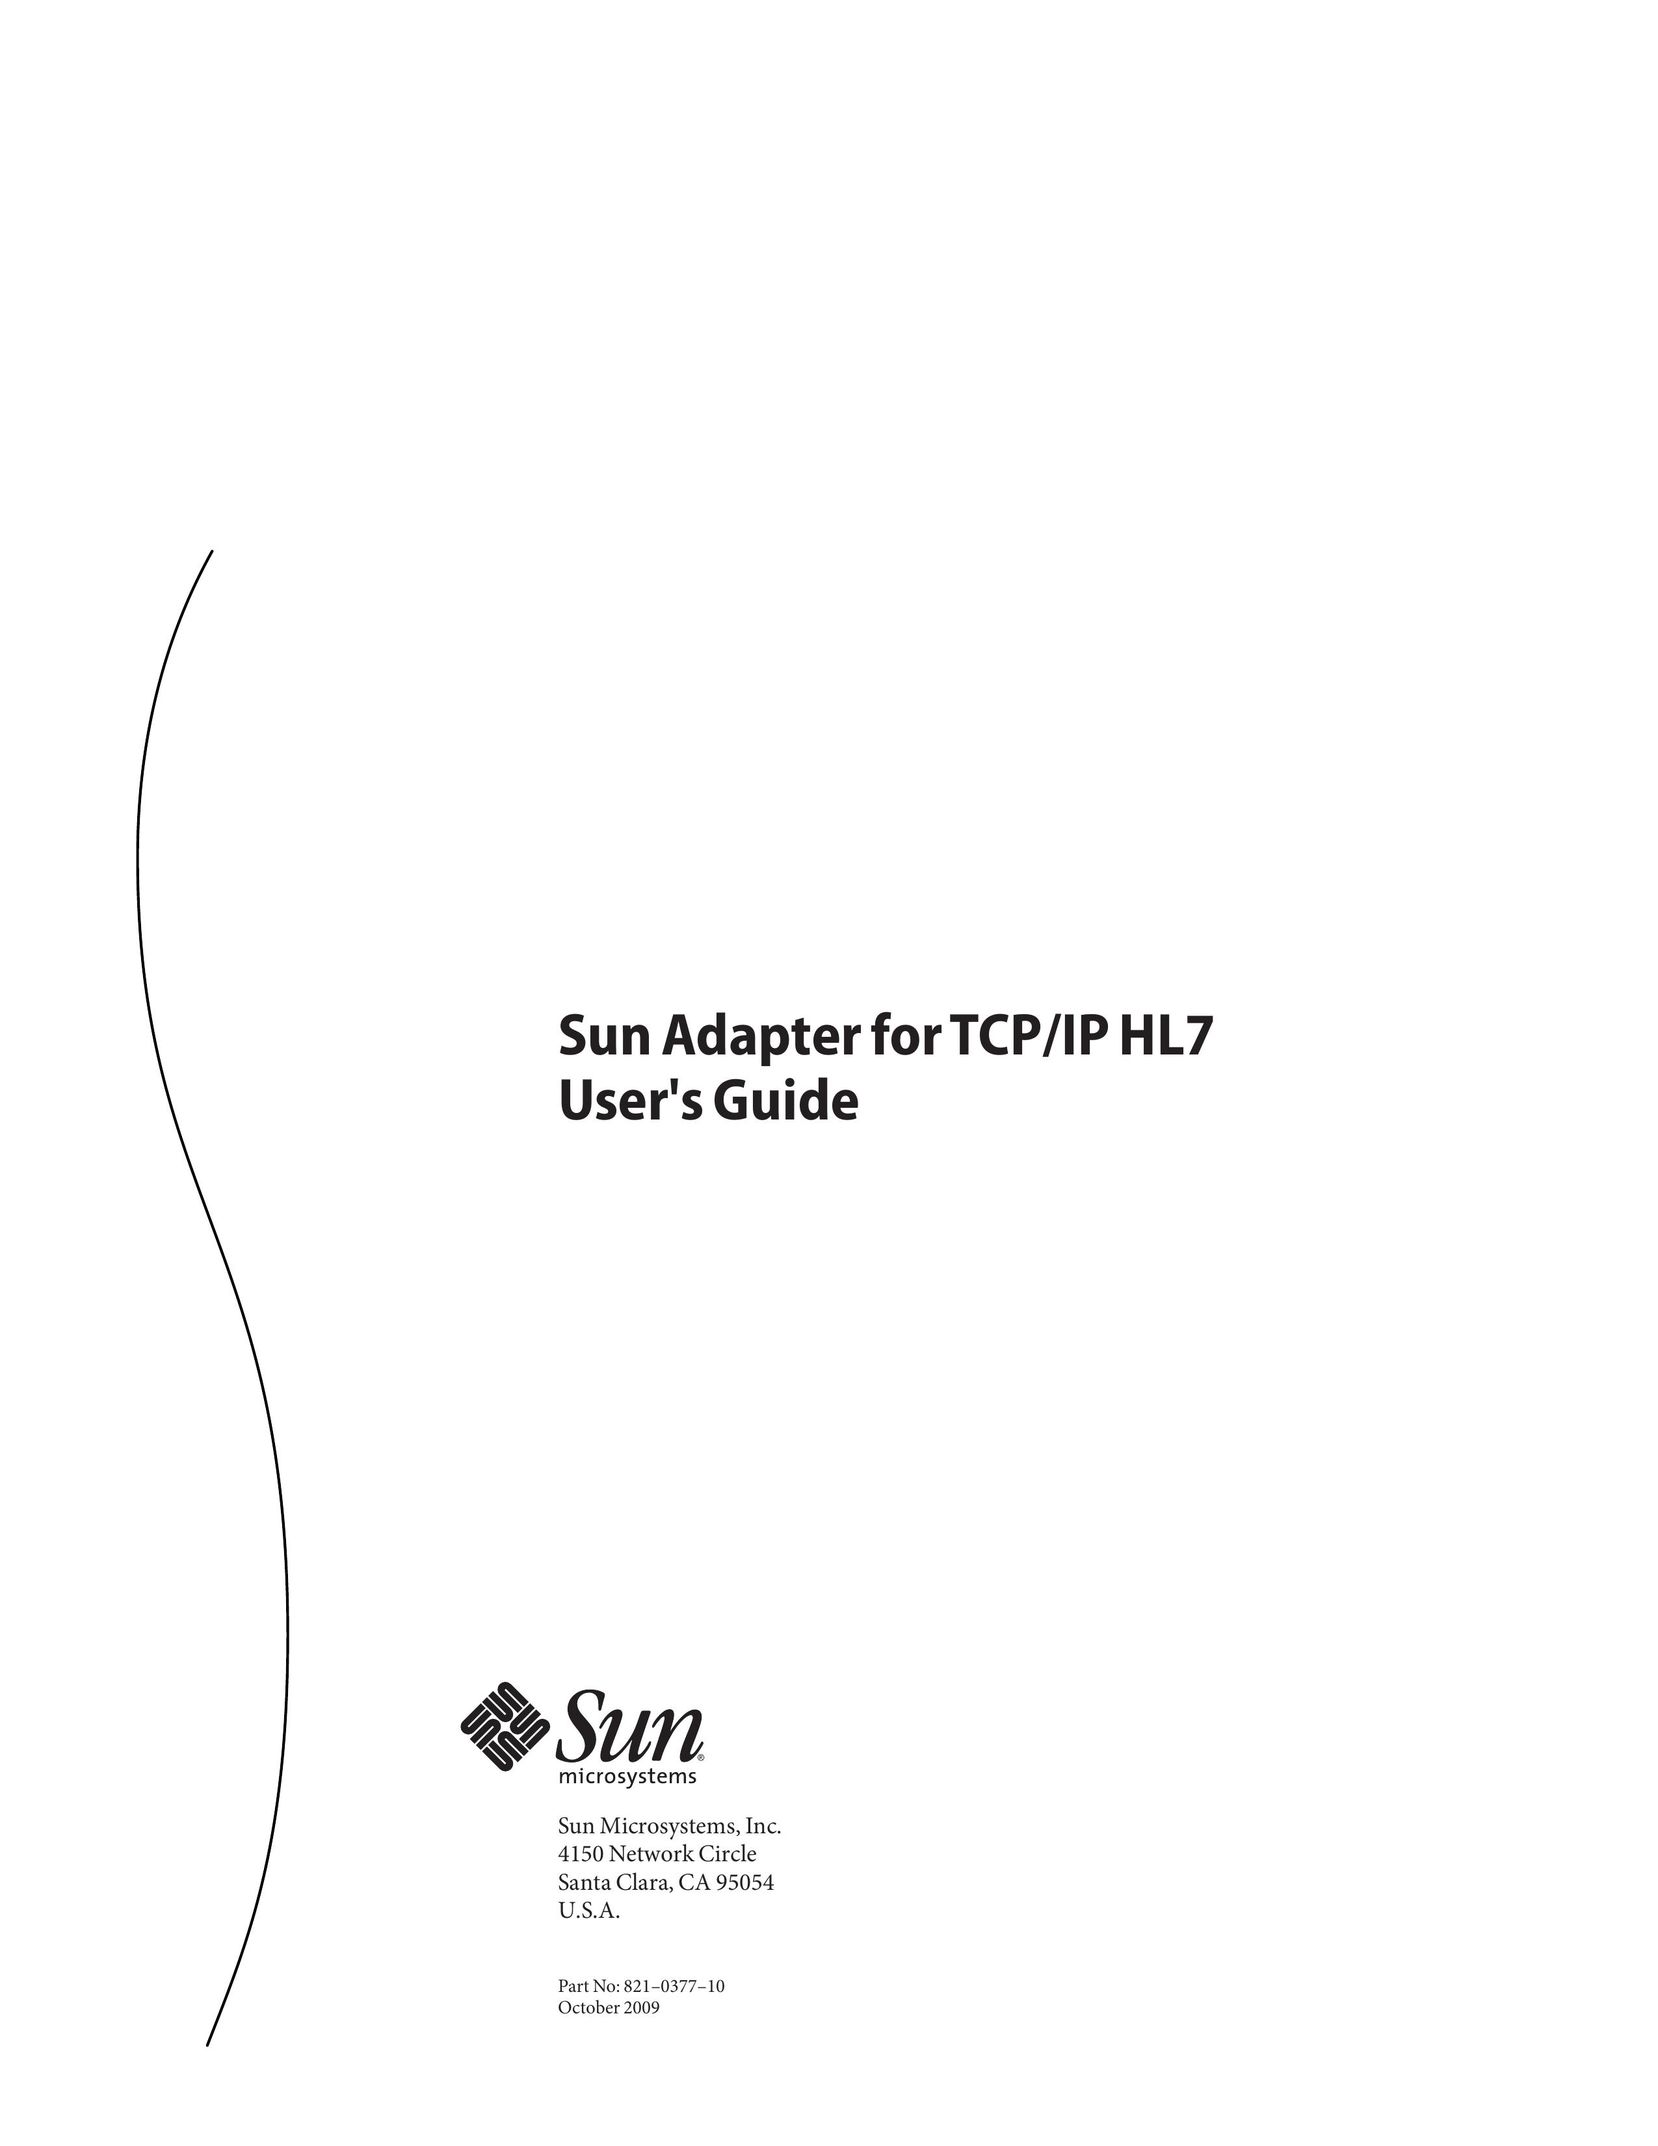 Sun Microsystems IP HL 7 Computer Hardware User Manual